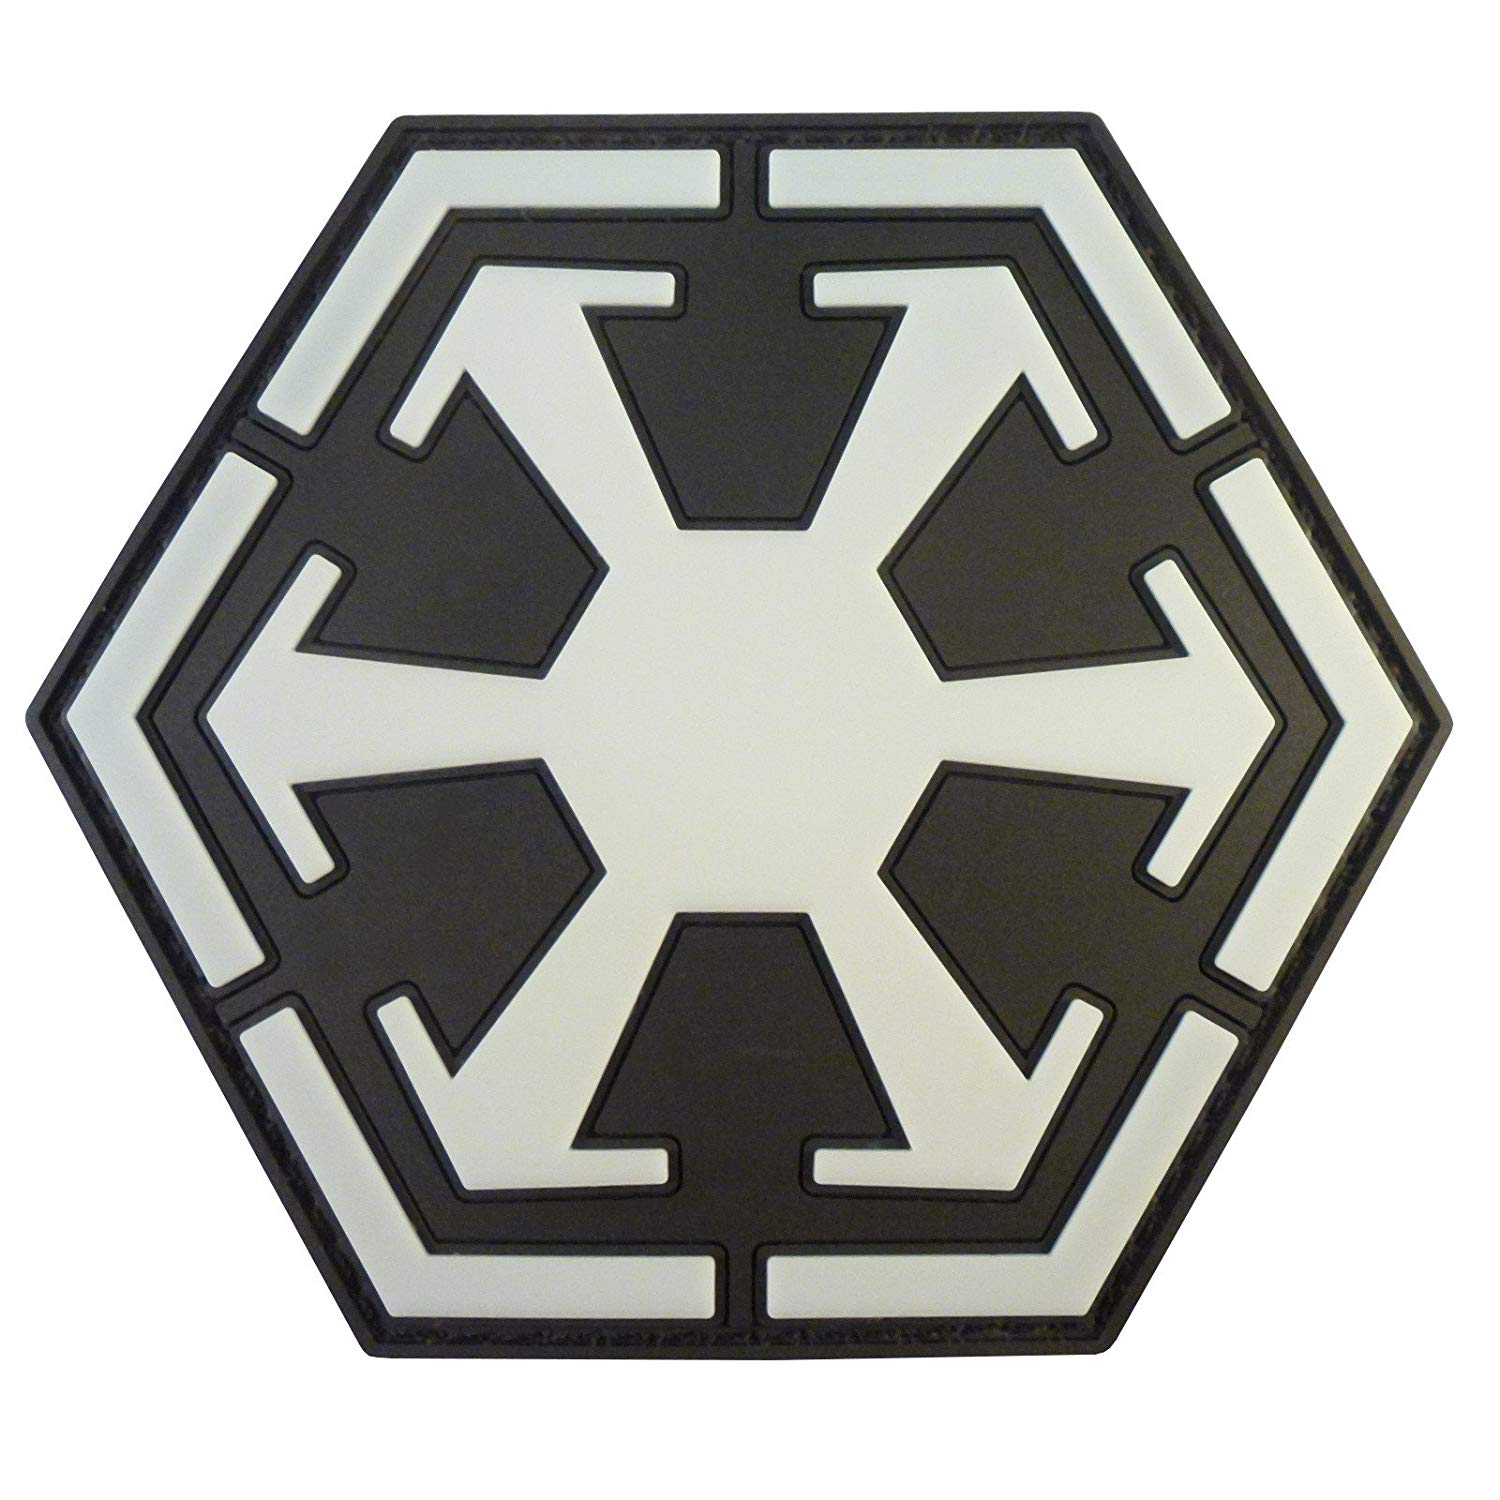 Sith Logo - Amazon.com : Star Wars Sith Empire Logo Old Republic PVC Rubber 3D ...